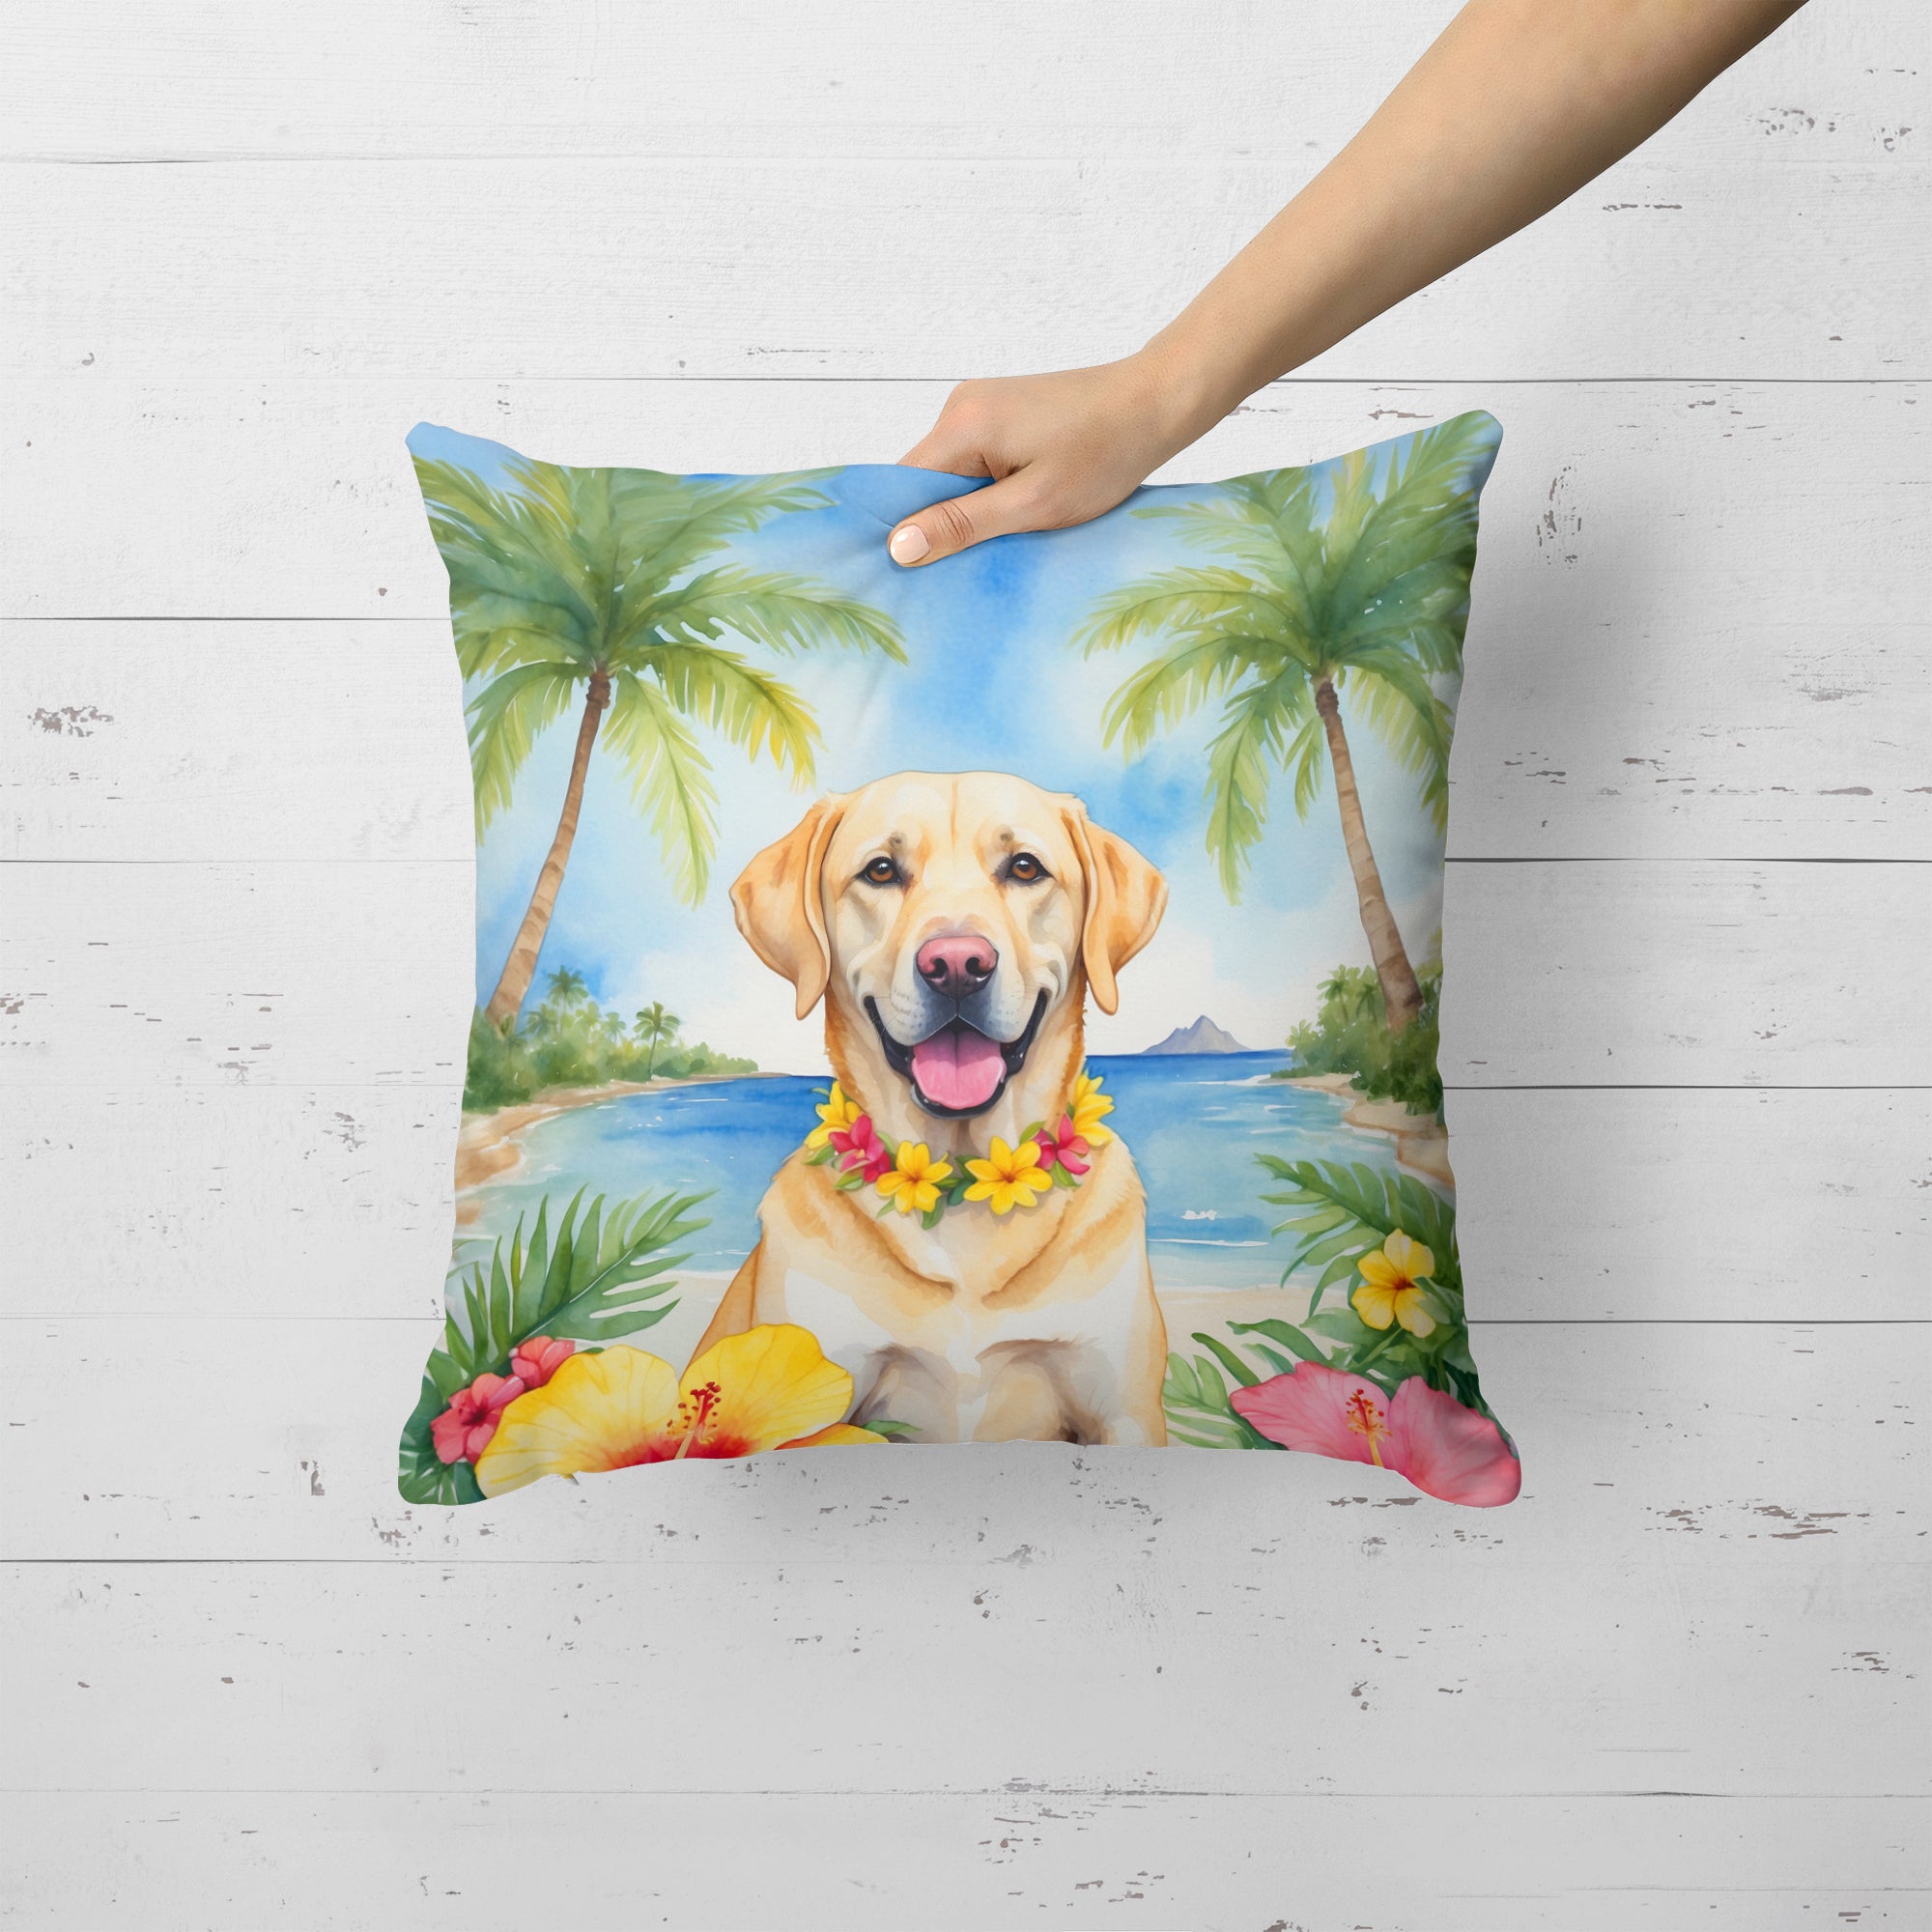 Buy this Yellow Labrador Retriever Luau Throw Pillow